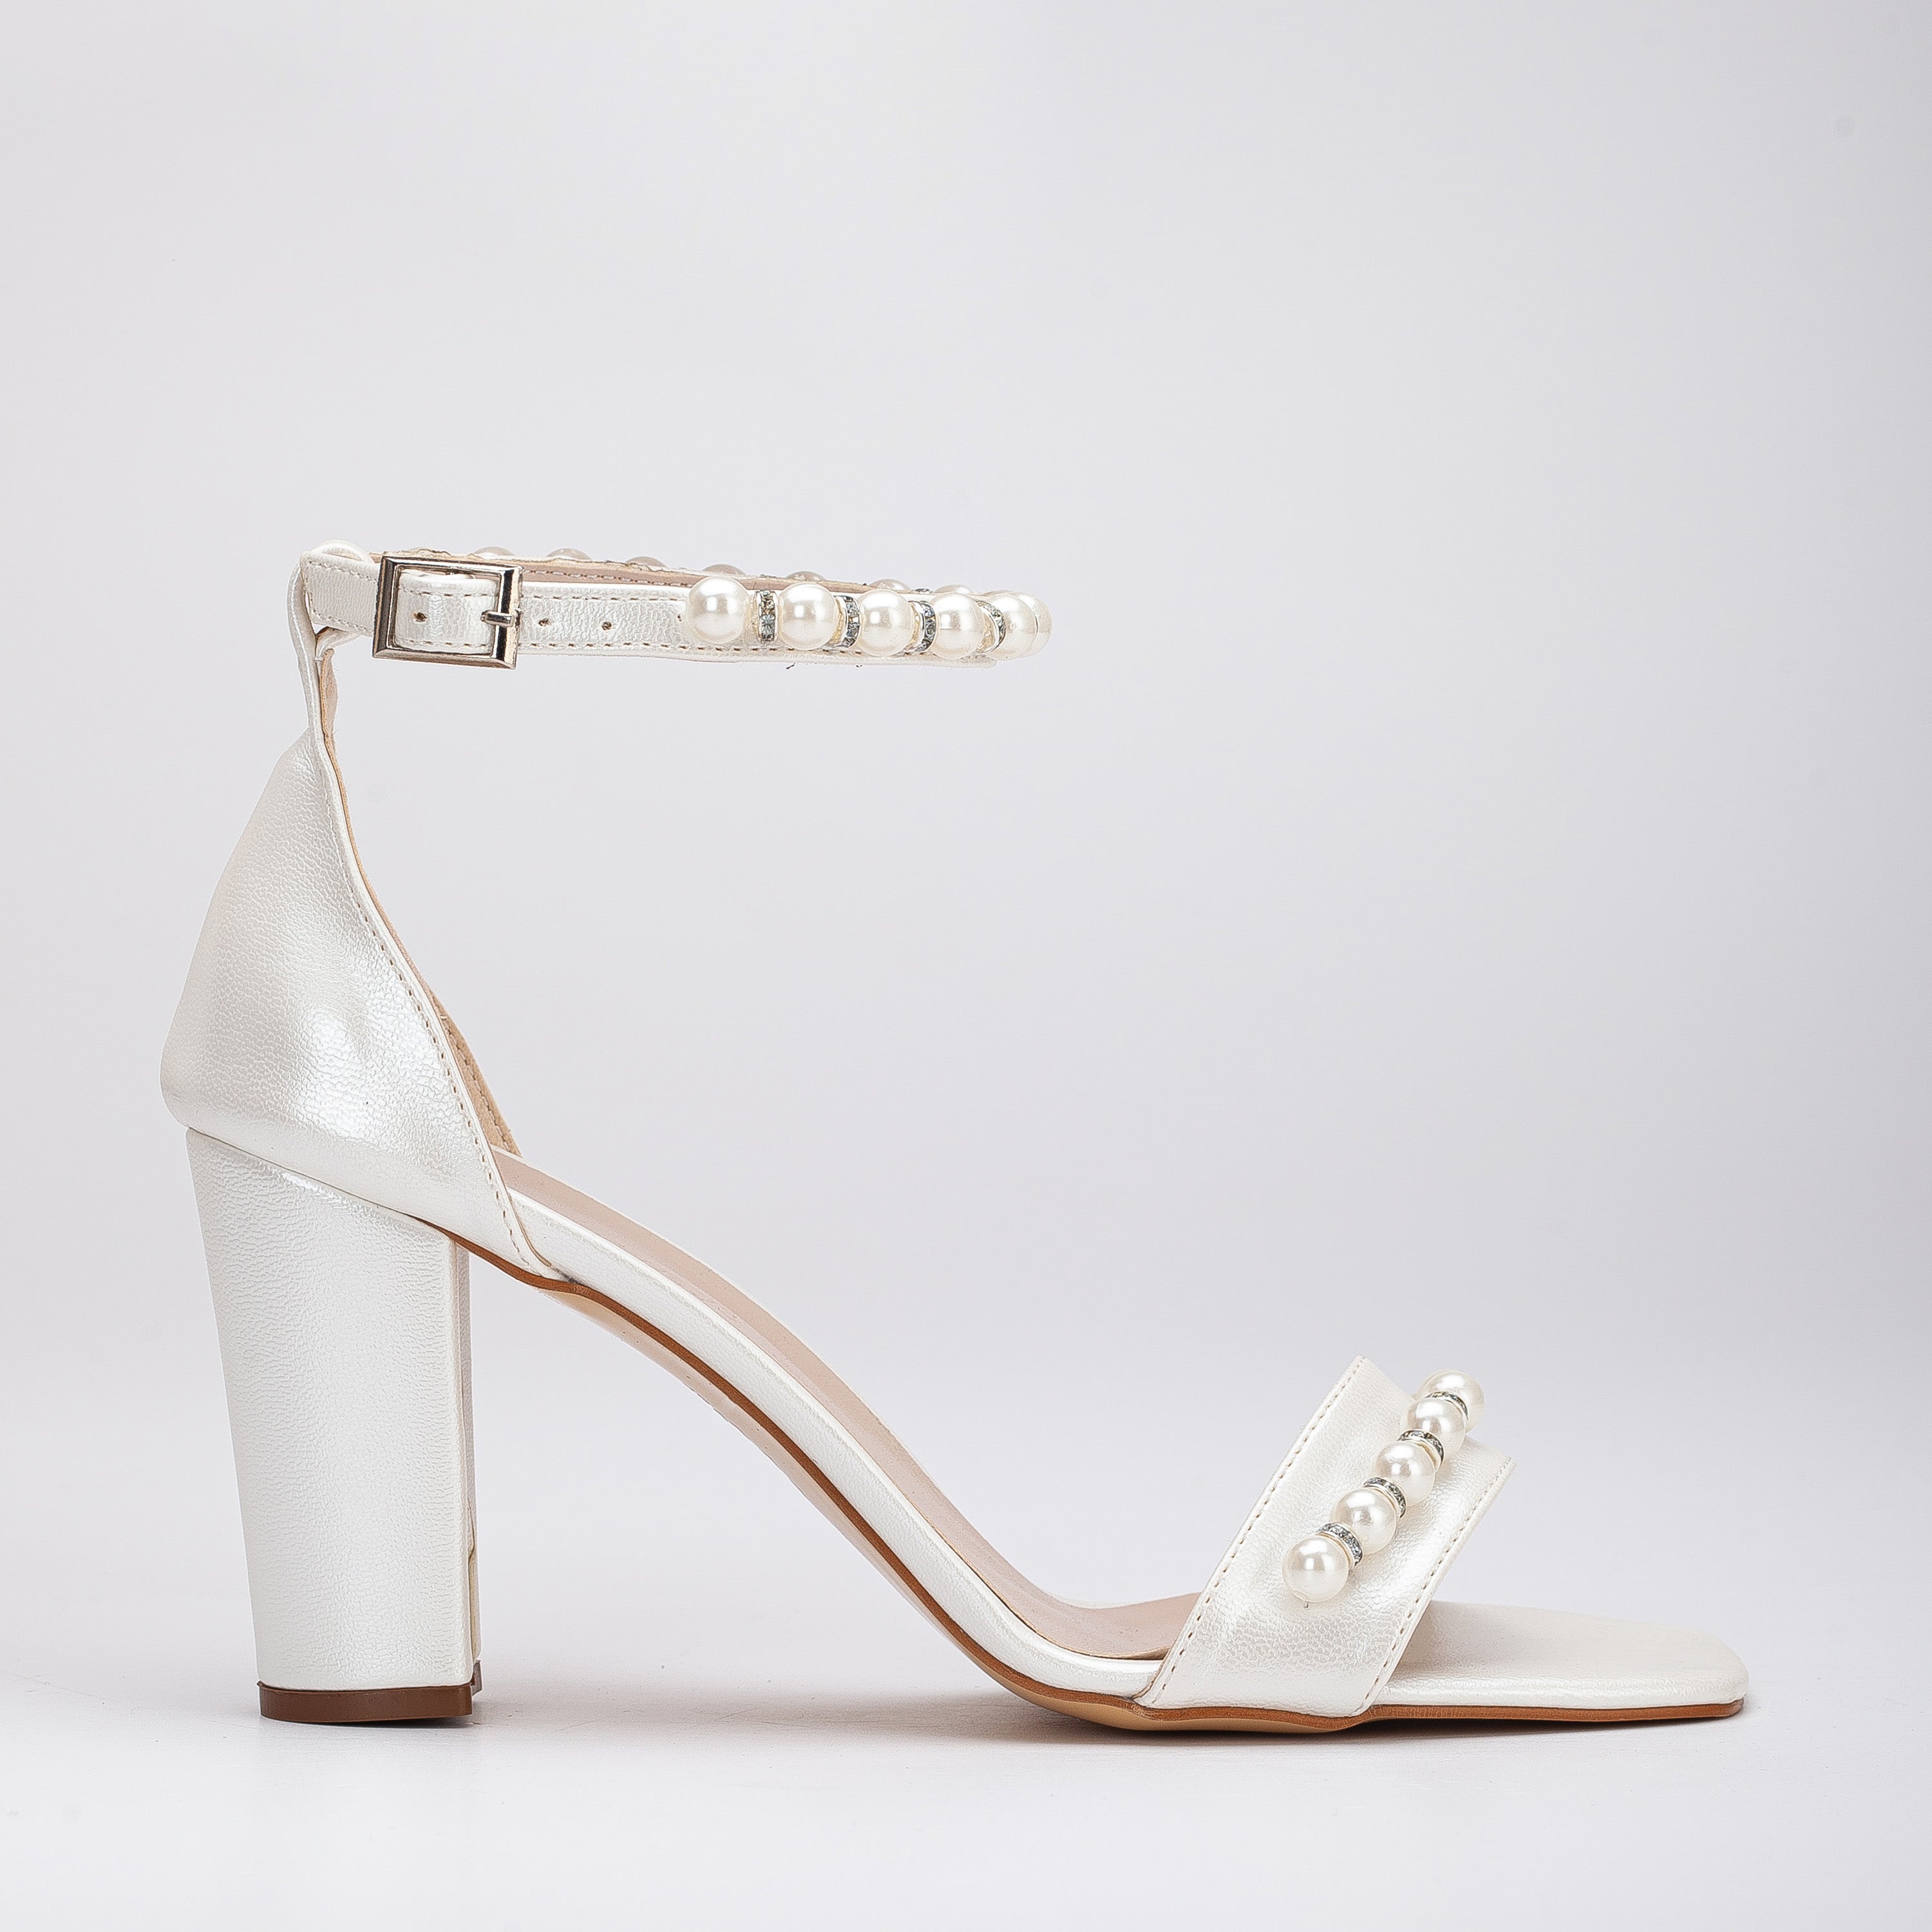 PRADA Sport Mule Sandals White Leather Block High Heel Shoes Size 39.5 US  9.5 | eBay